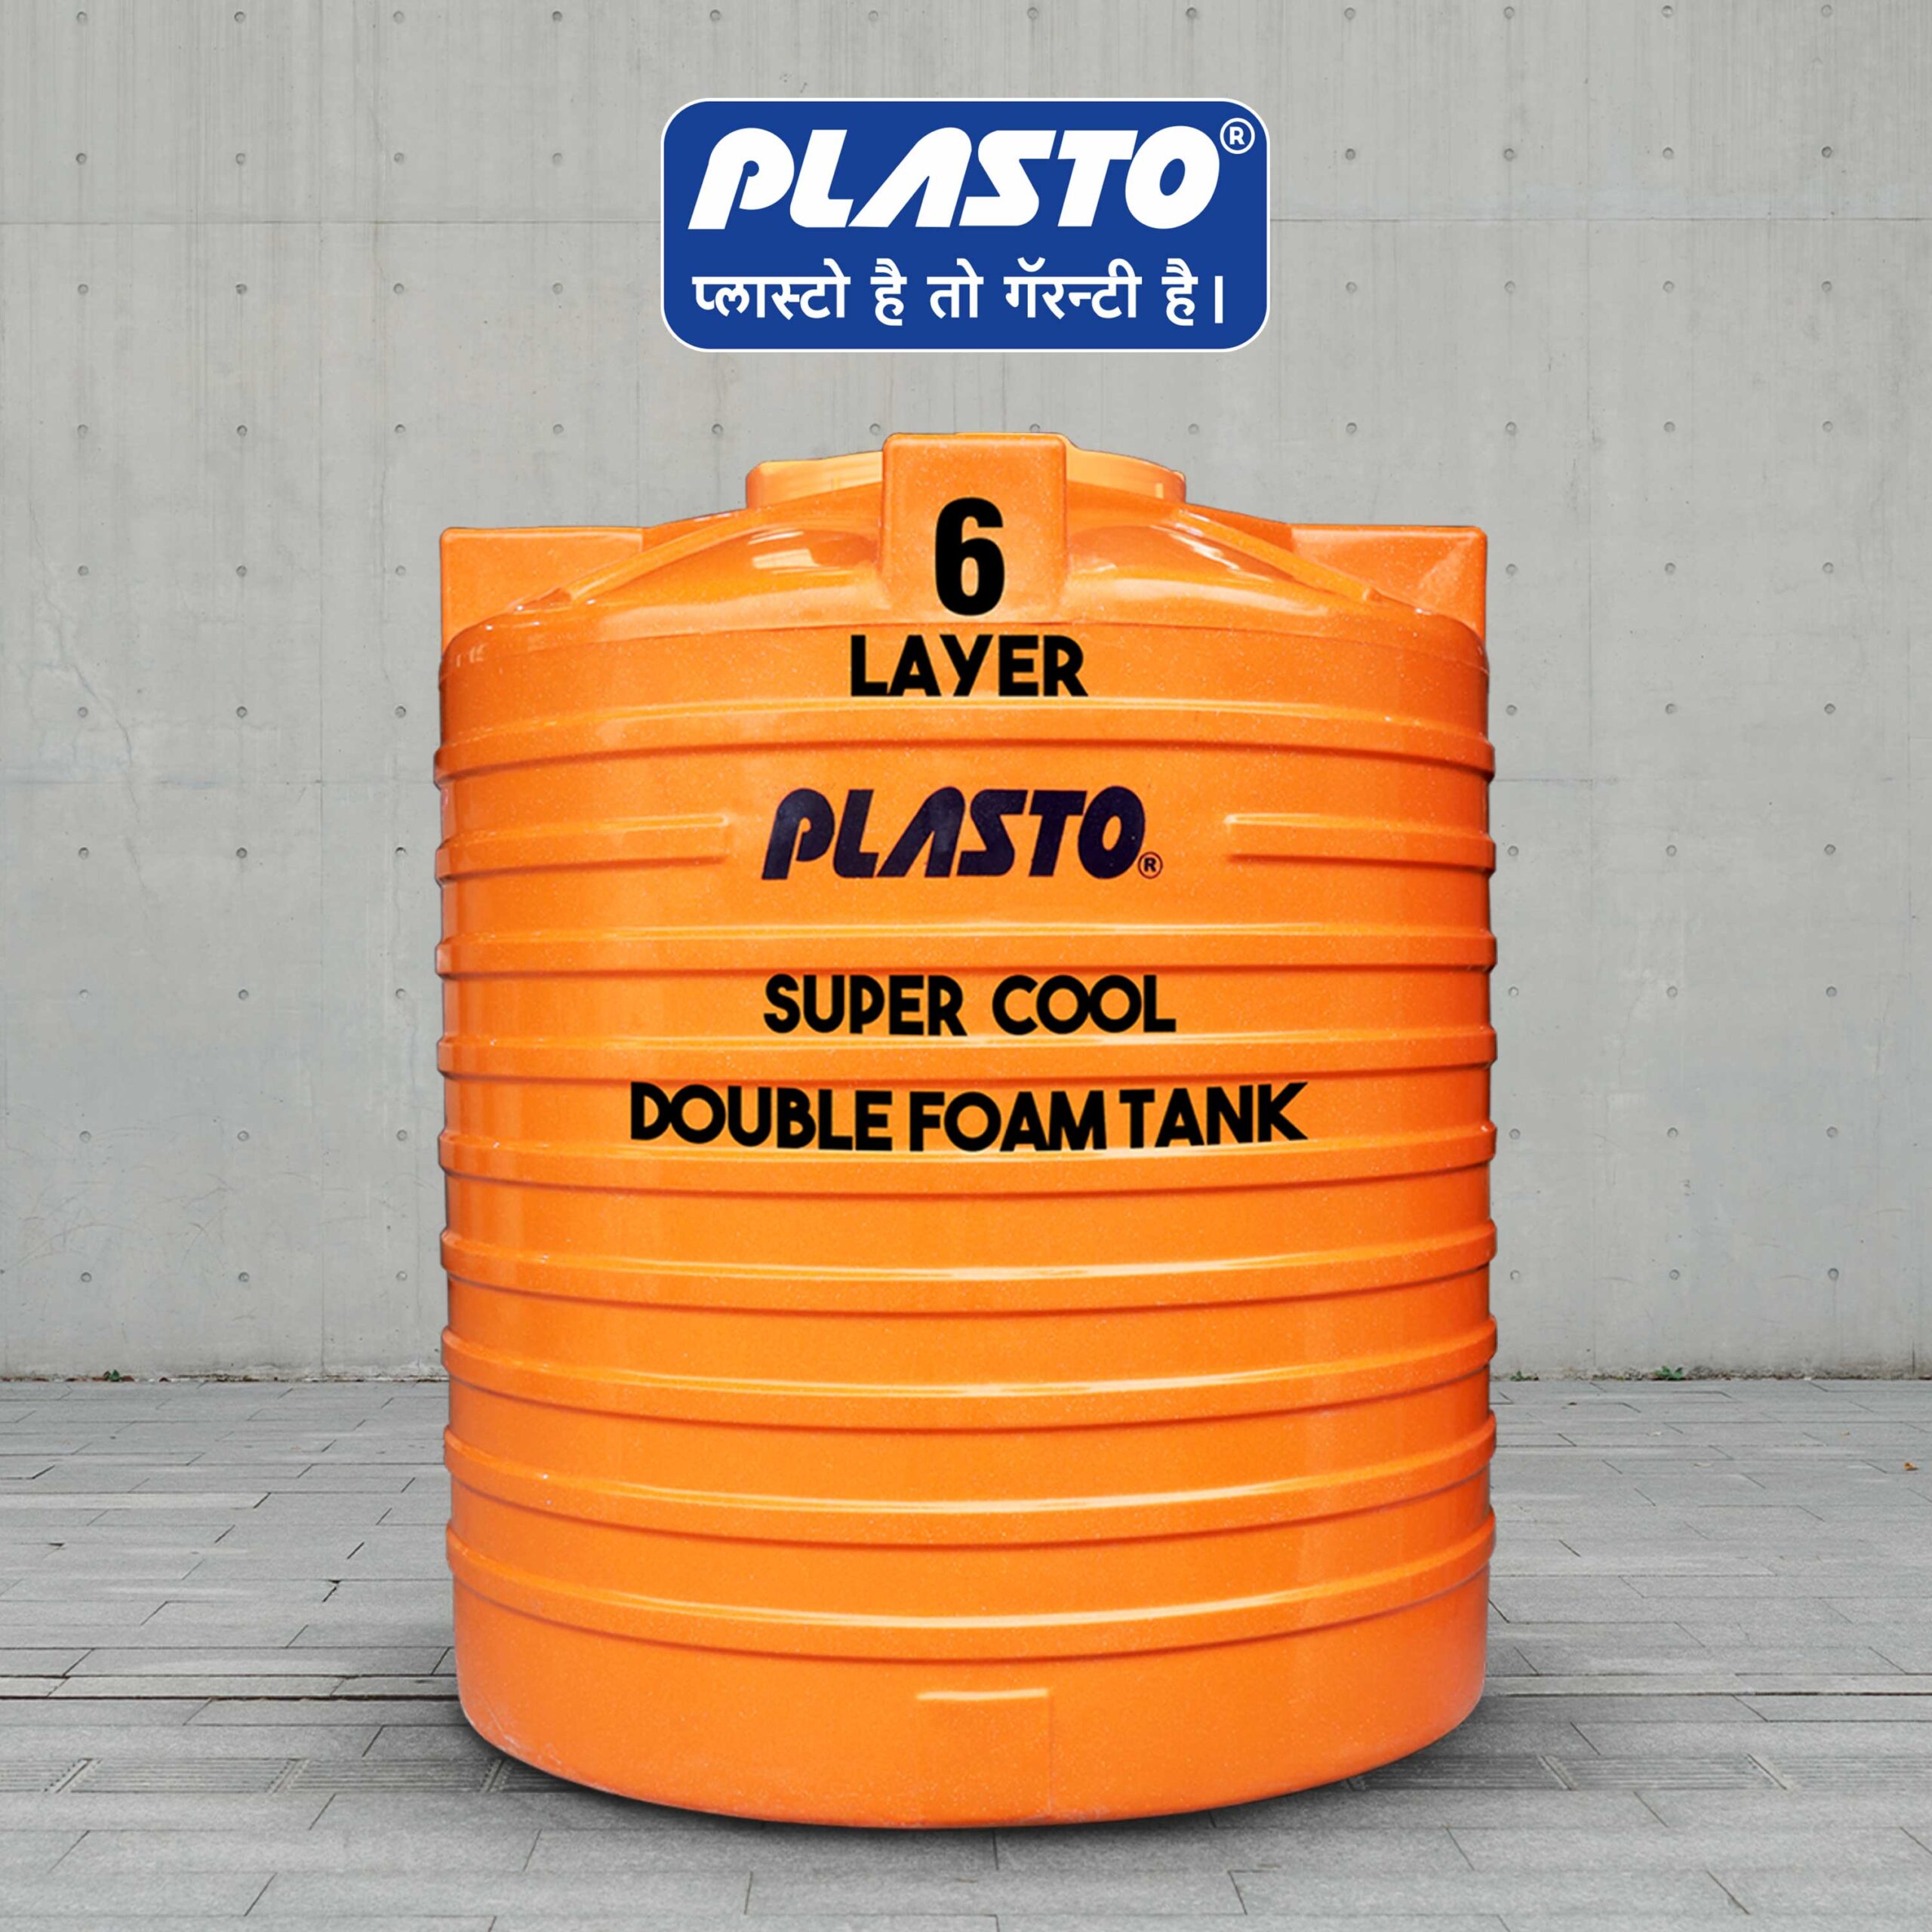 Plasto 6 Layer Double Foam Super Cool Water Storage Tanks